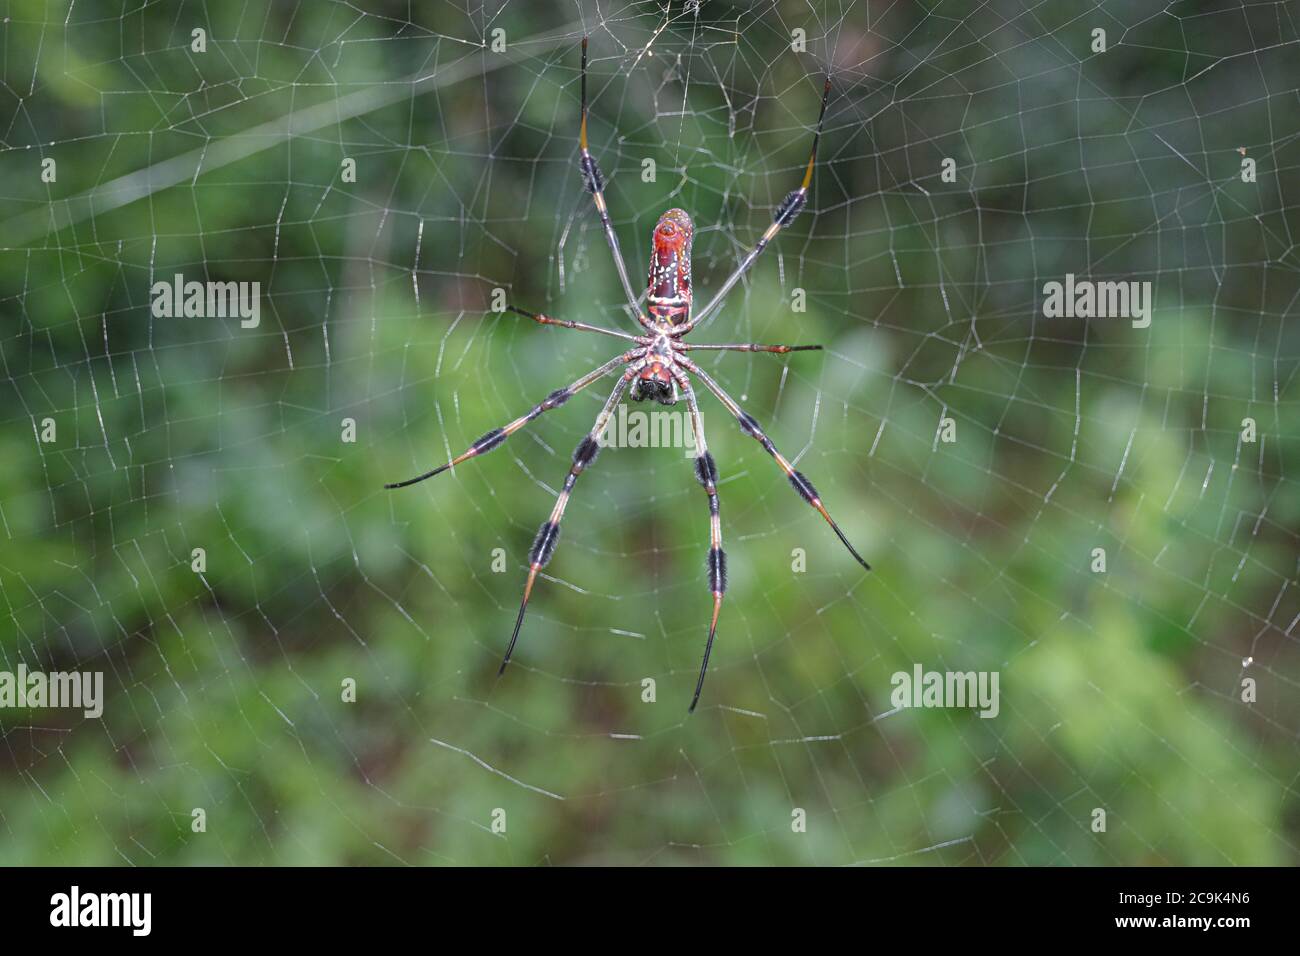 Female Golden Silk Spider. Trichonephila ,clavipes. On web. Stock Photo